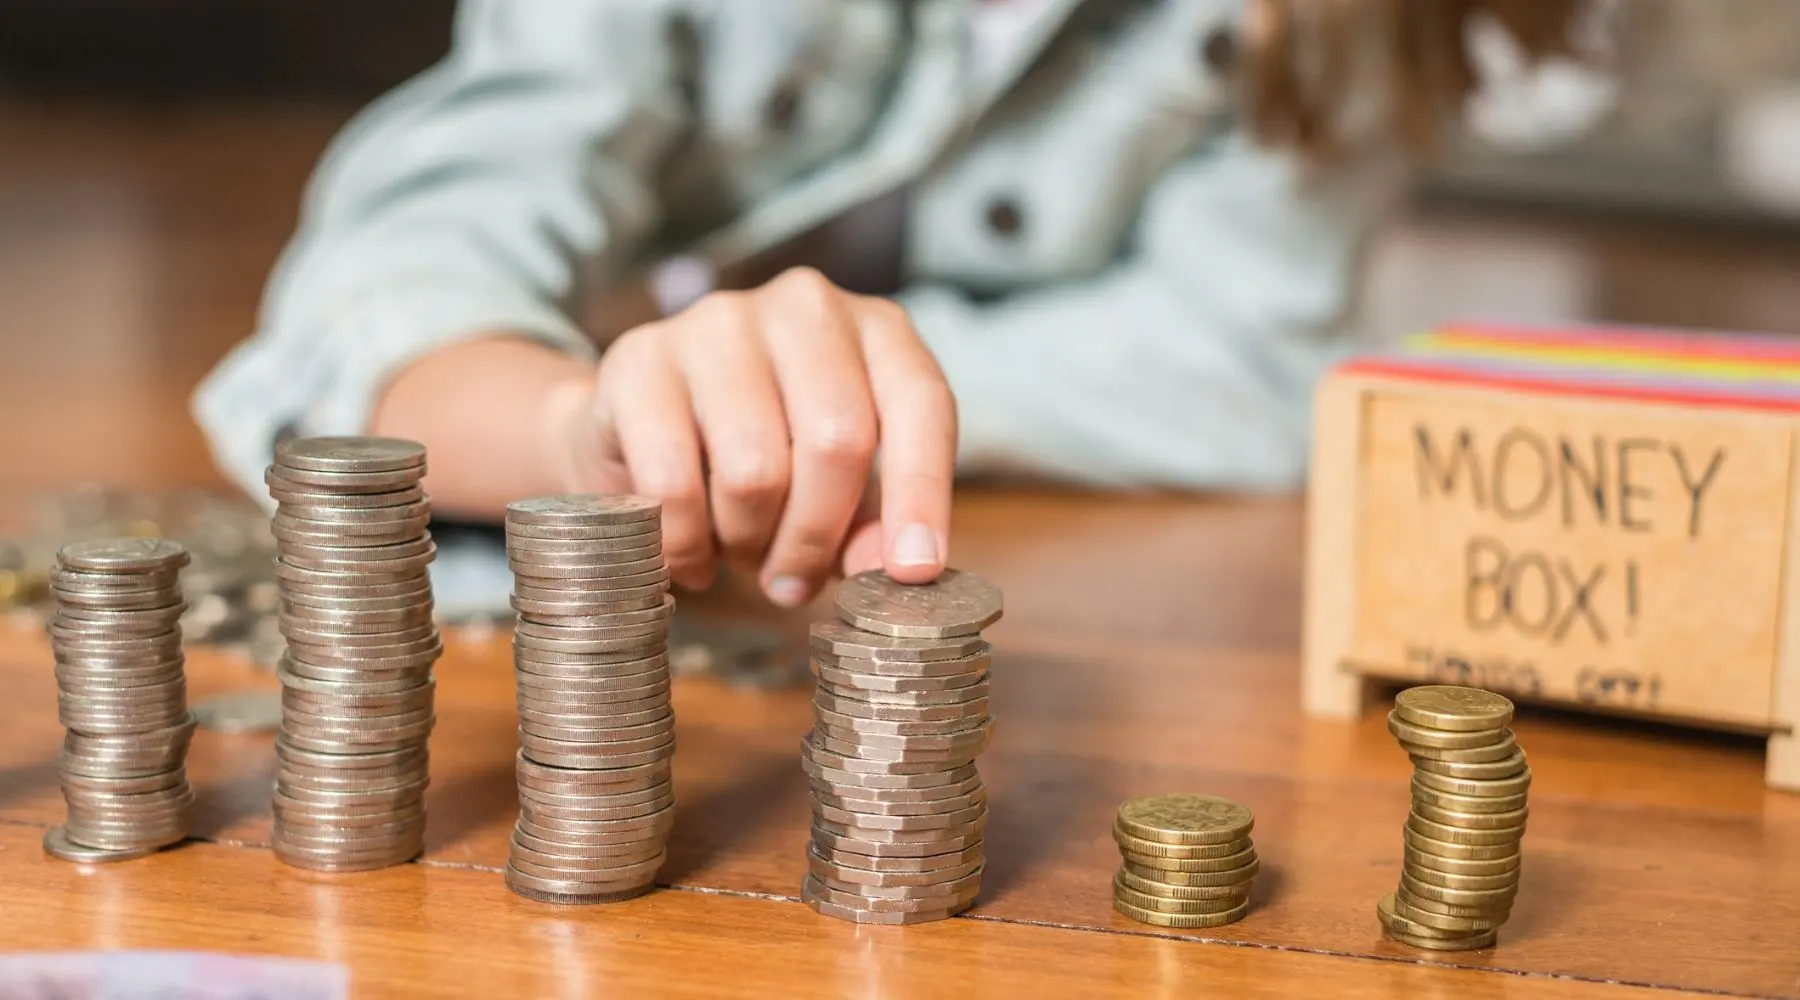 A child counts Australian coins.